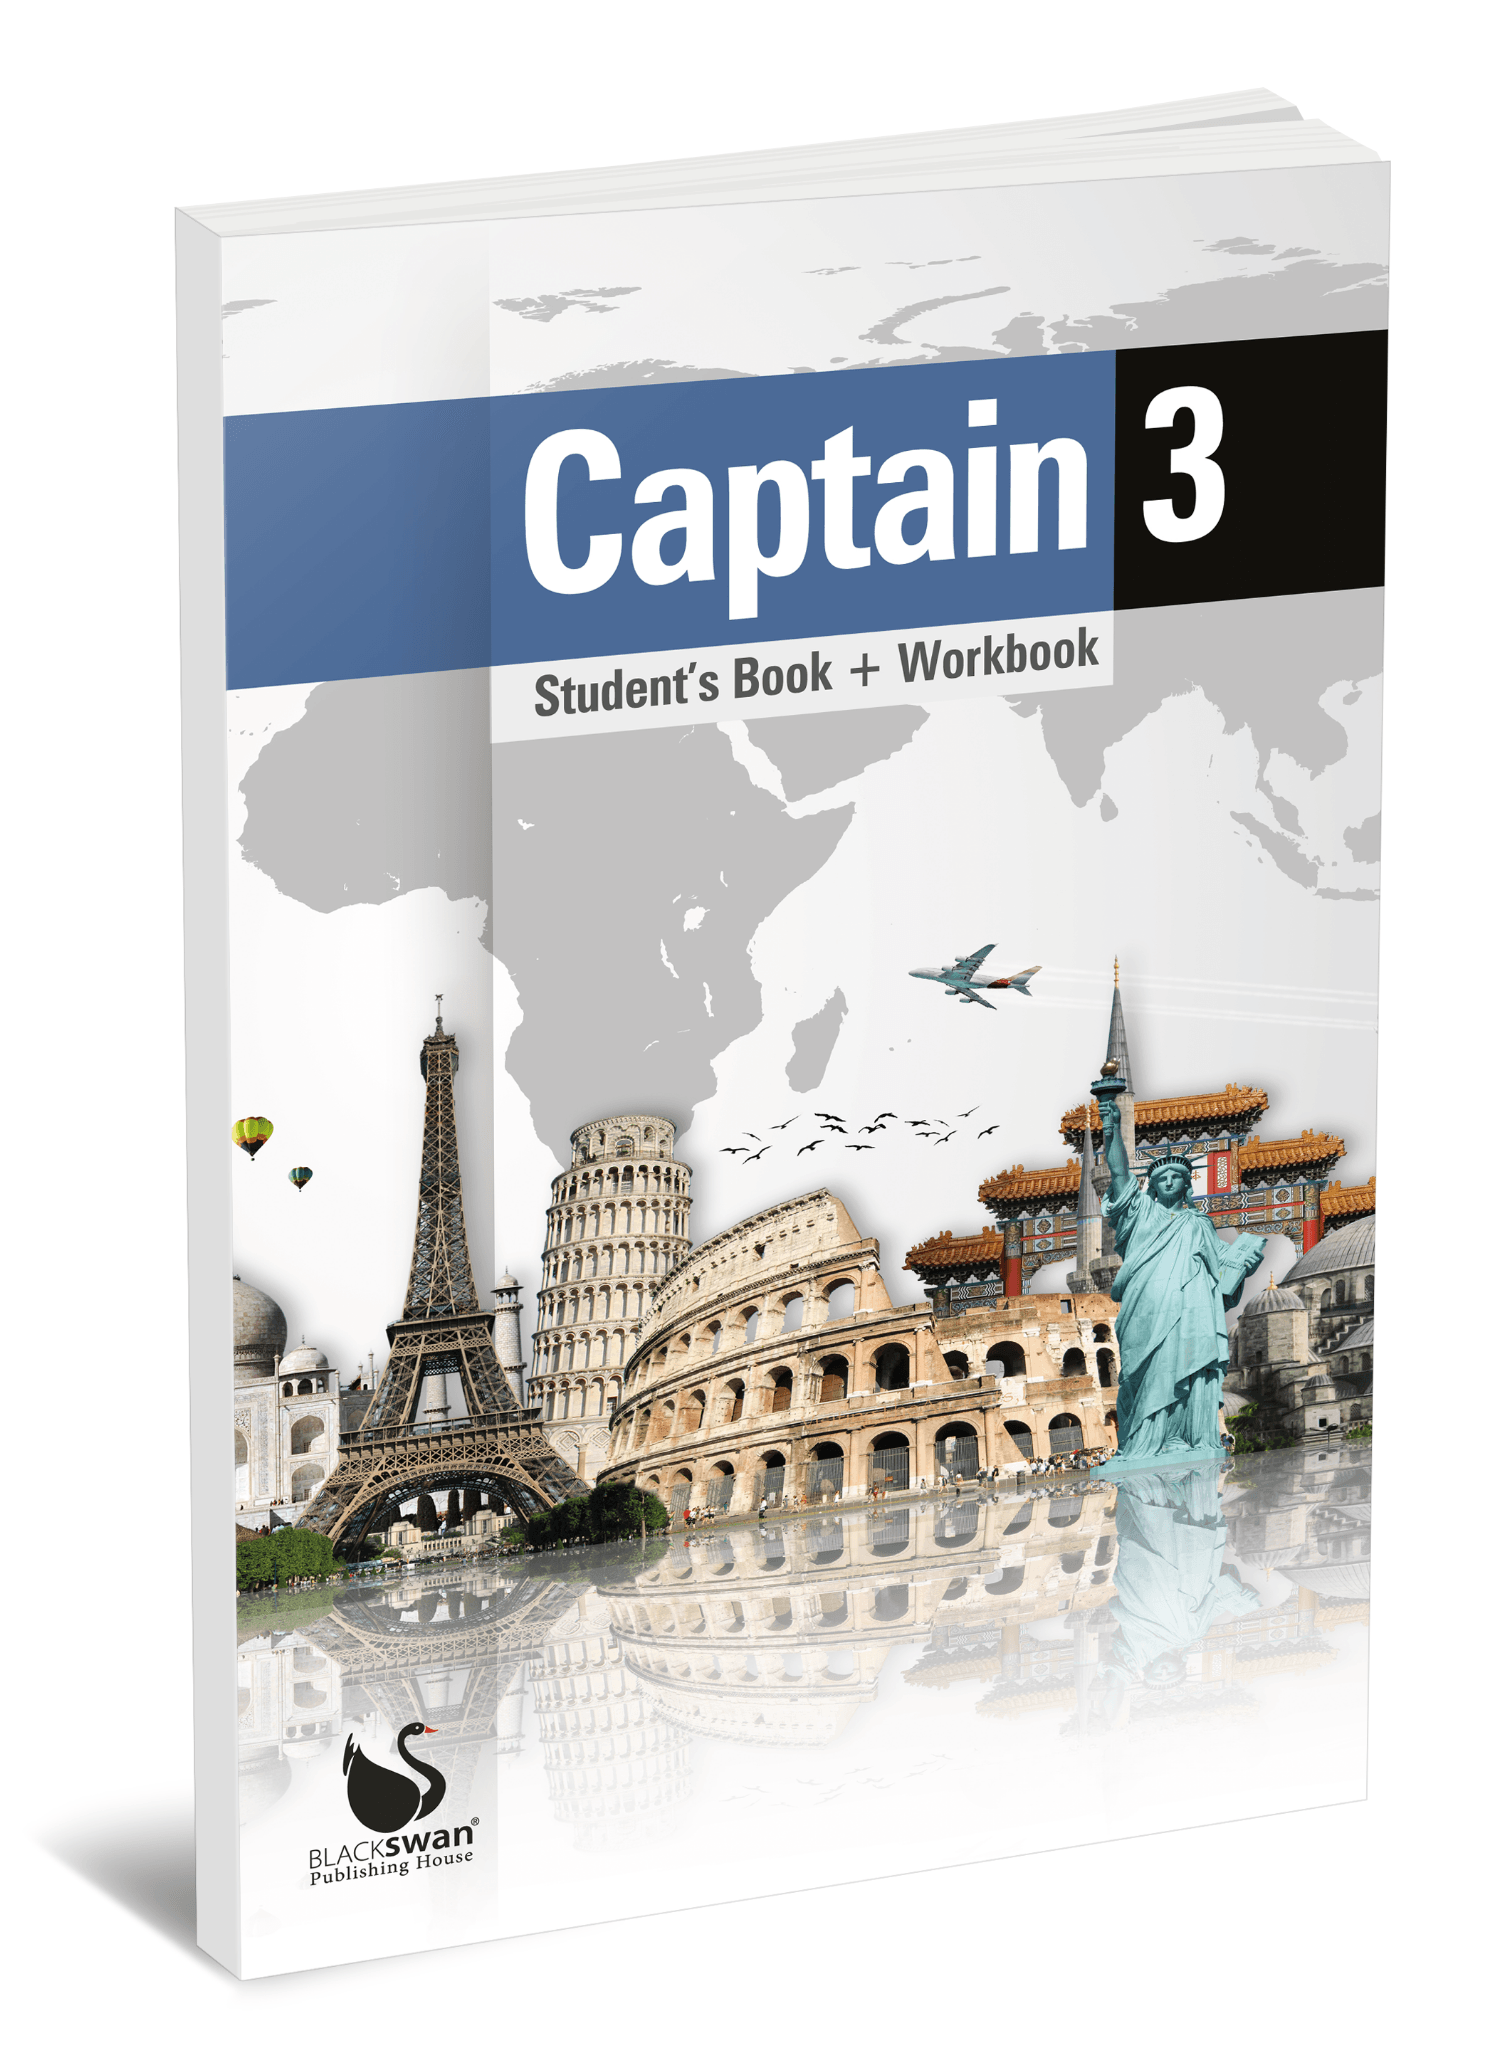 Captain 3 Student’s Book + Workbook